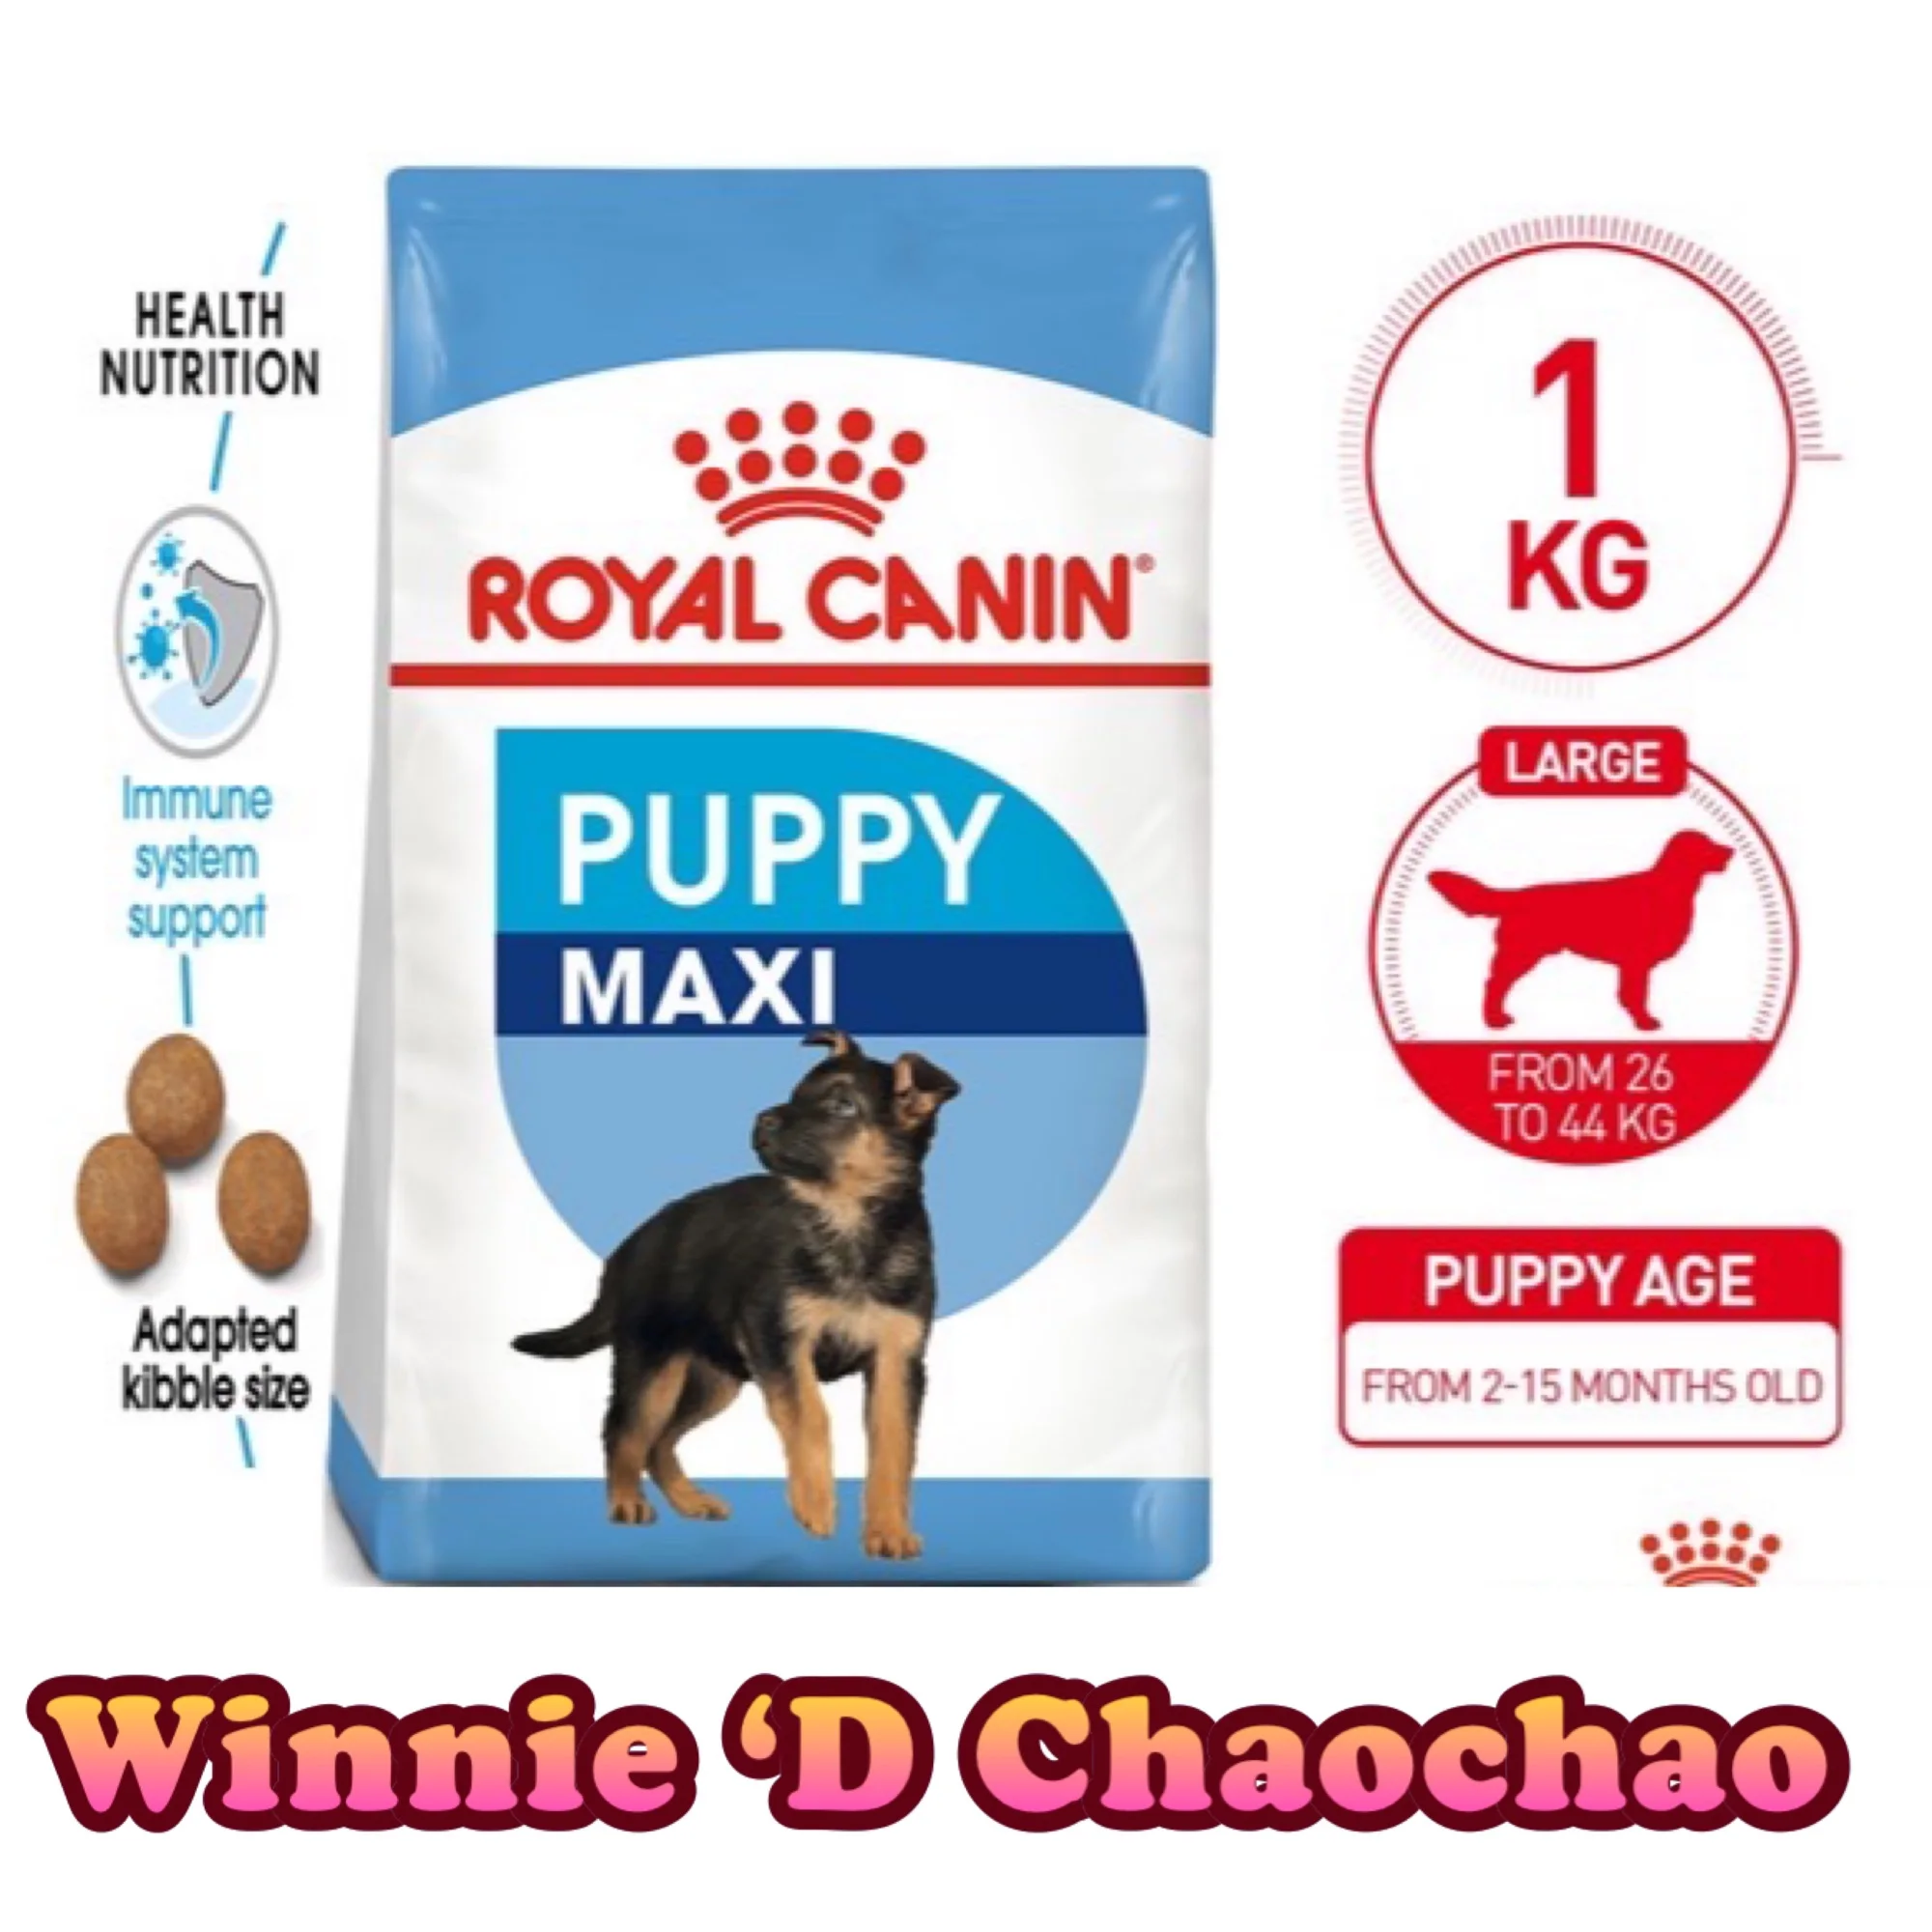 Royal canin Maxi Puppy 1kg Original Pack